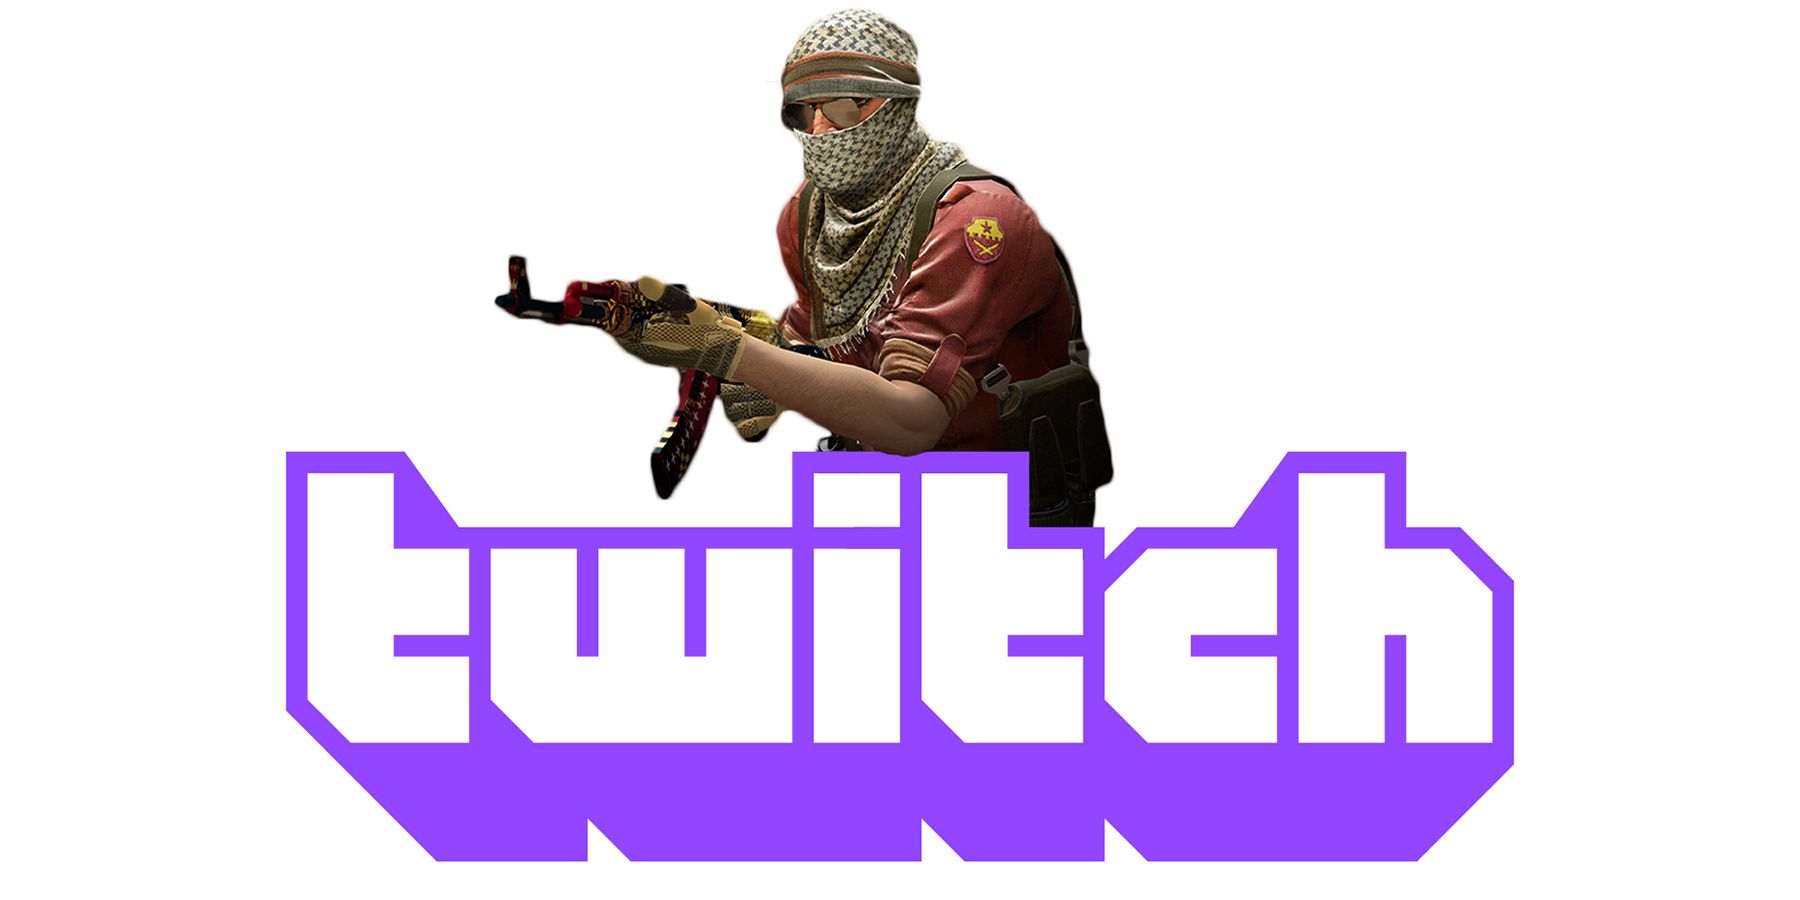 Counter-Strike Global Offensive CSGO Terrorist behind Twitch logo on white background